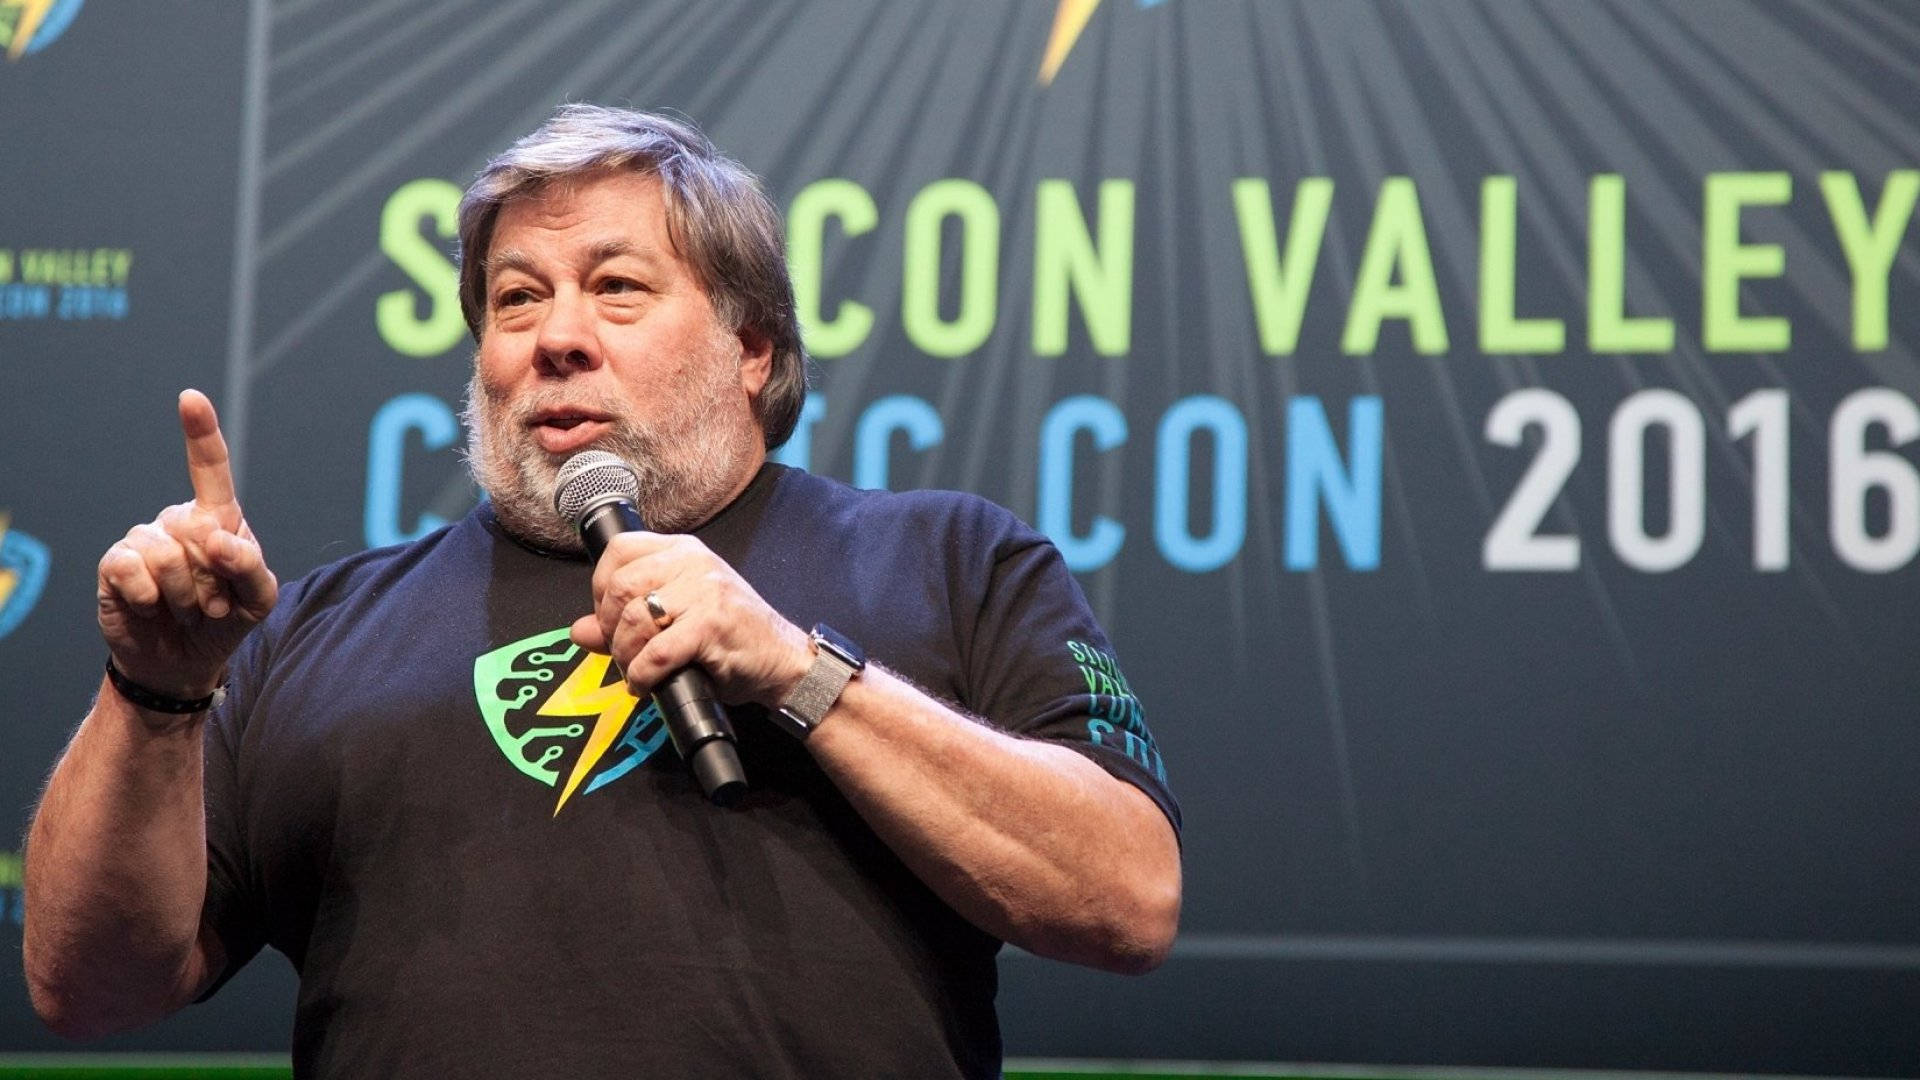 Steve Wozniak Silicon Valley Comic Con 2016 Wallpaper